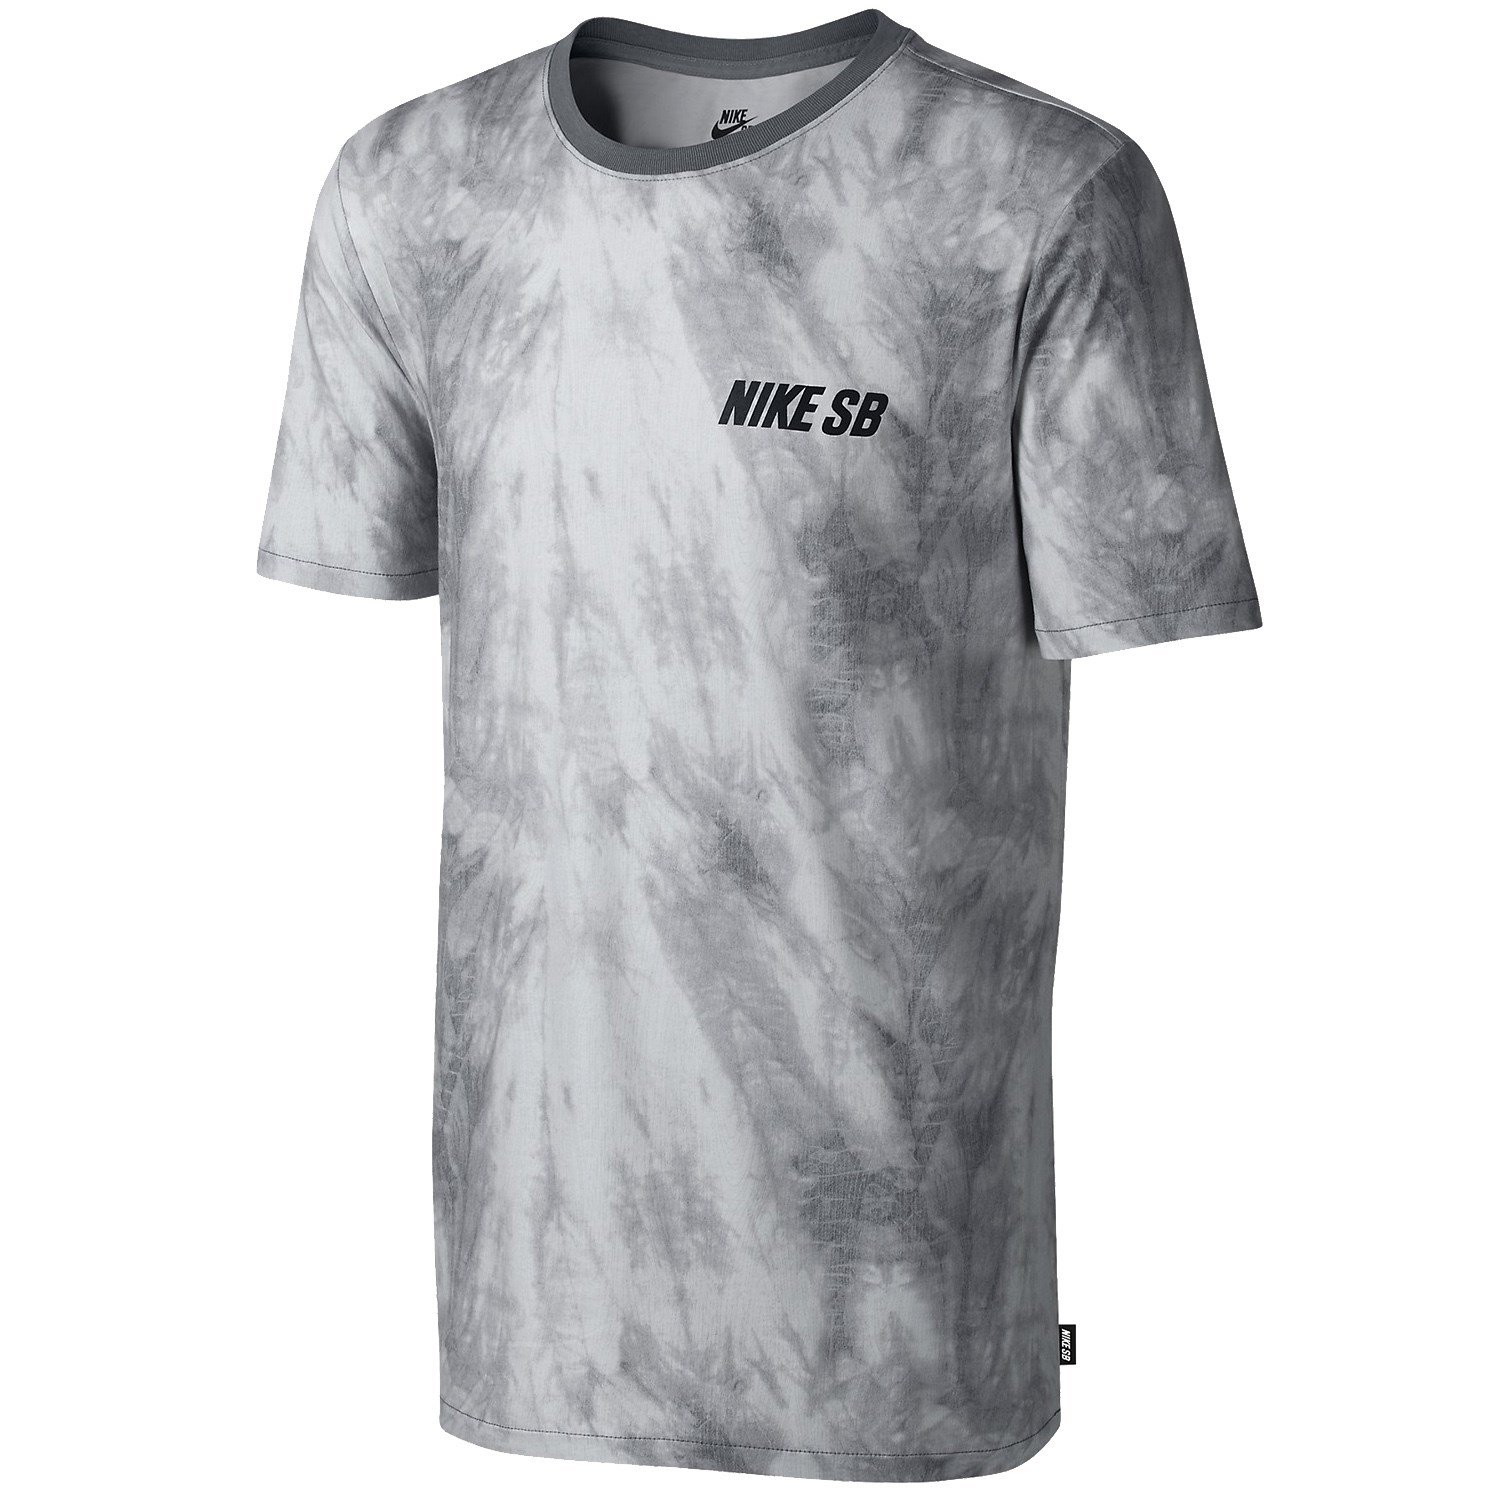 Nike SB Shibori Print T-Shirt | evo